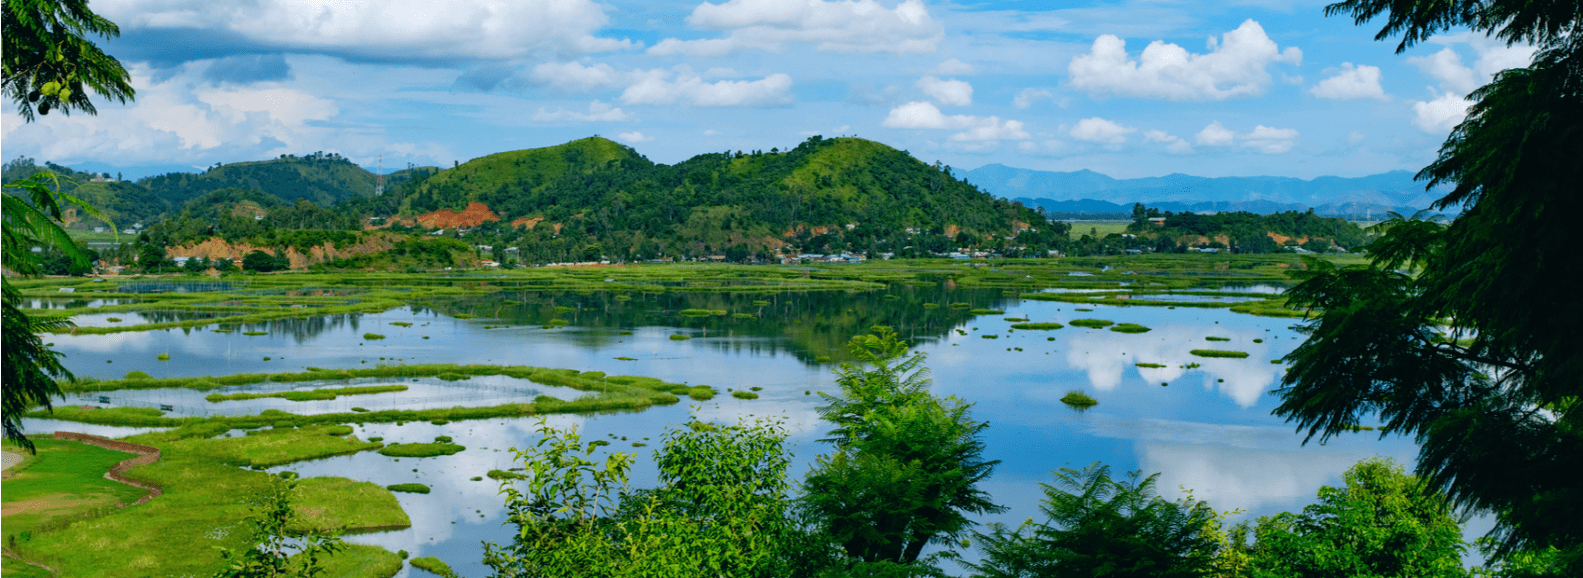 Beautiful natural lake view in Imphal city